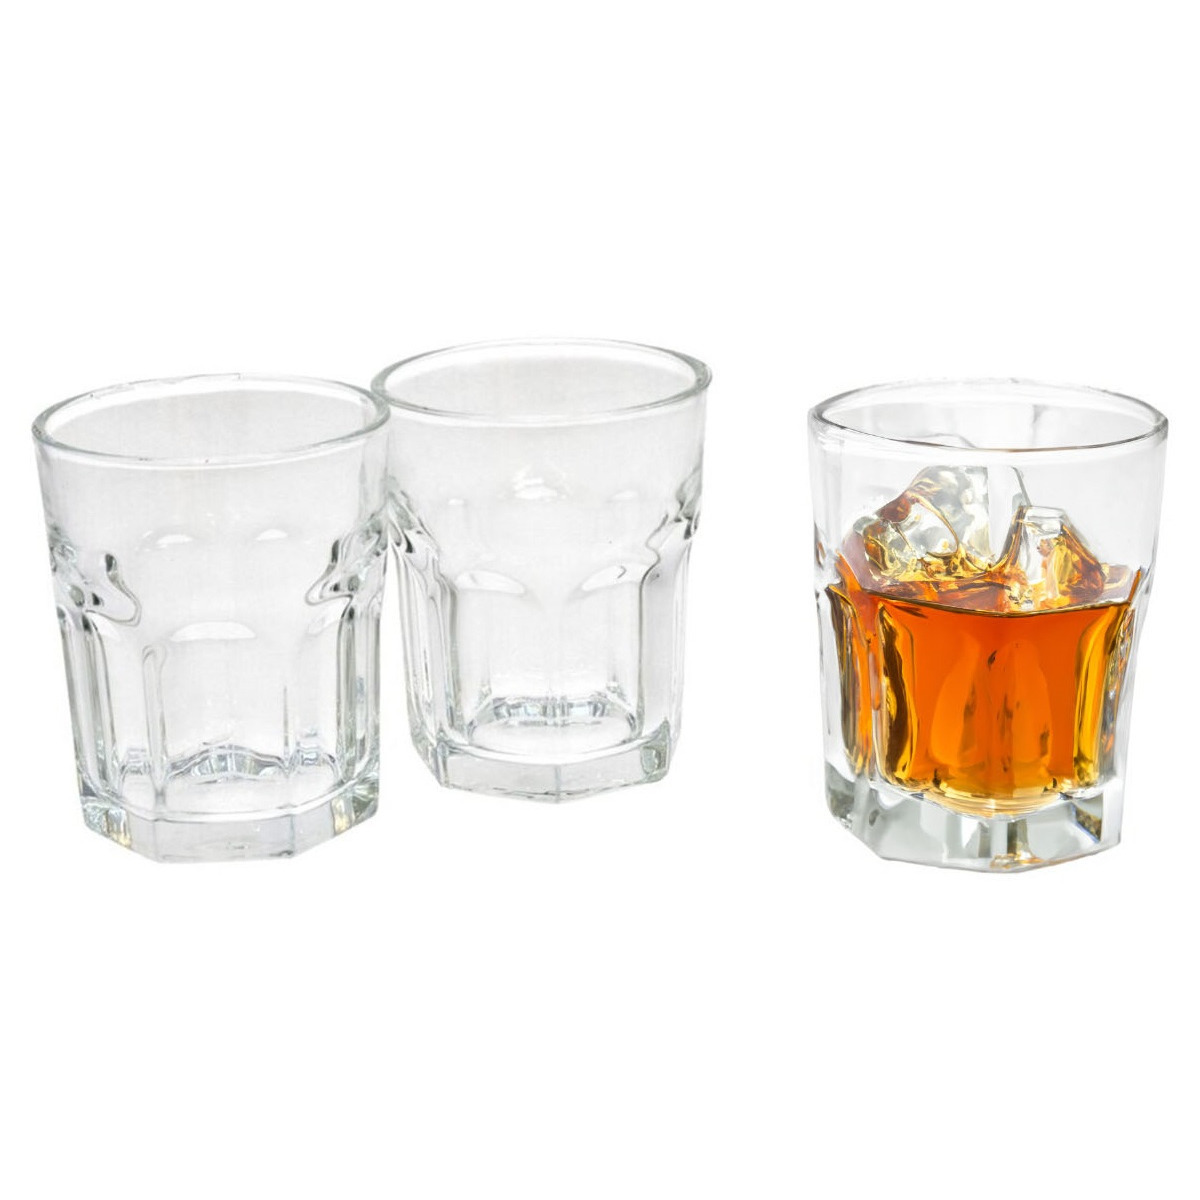 Gerimport Waterglazen/drinkglazen tumblers Elvira - transparant glas - 3x stuks - 256 ml -